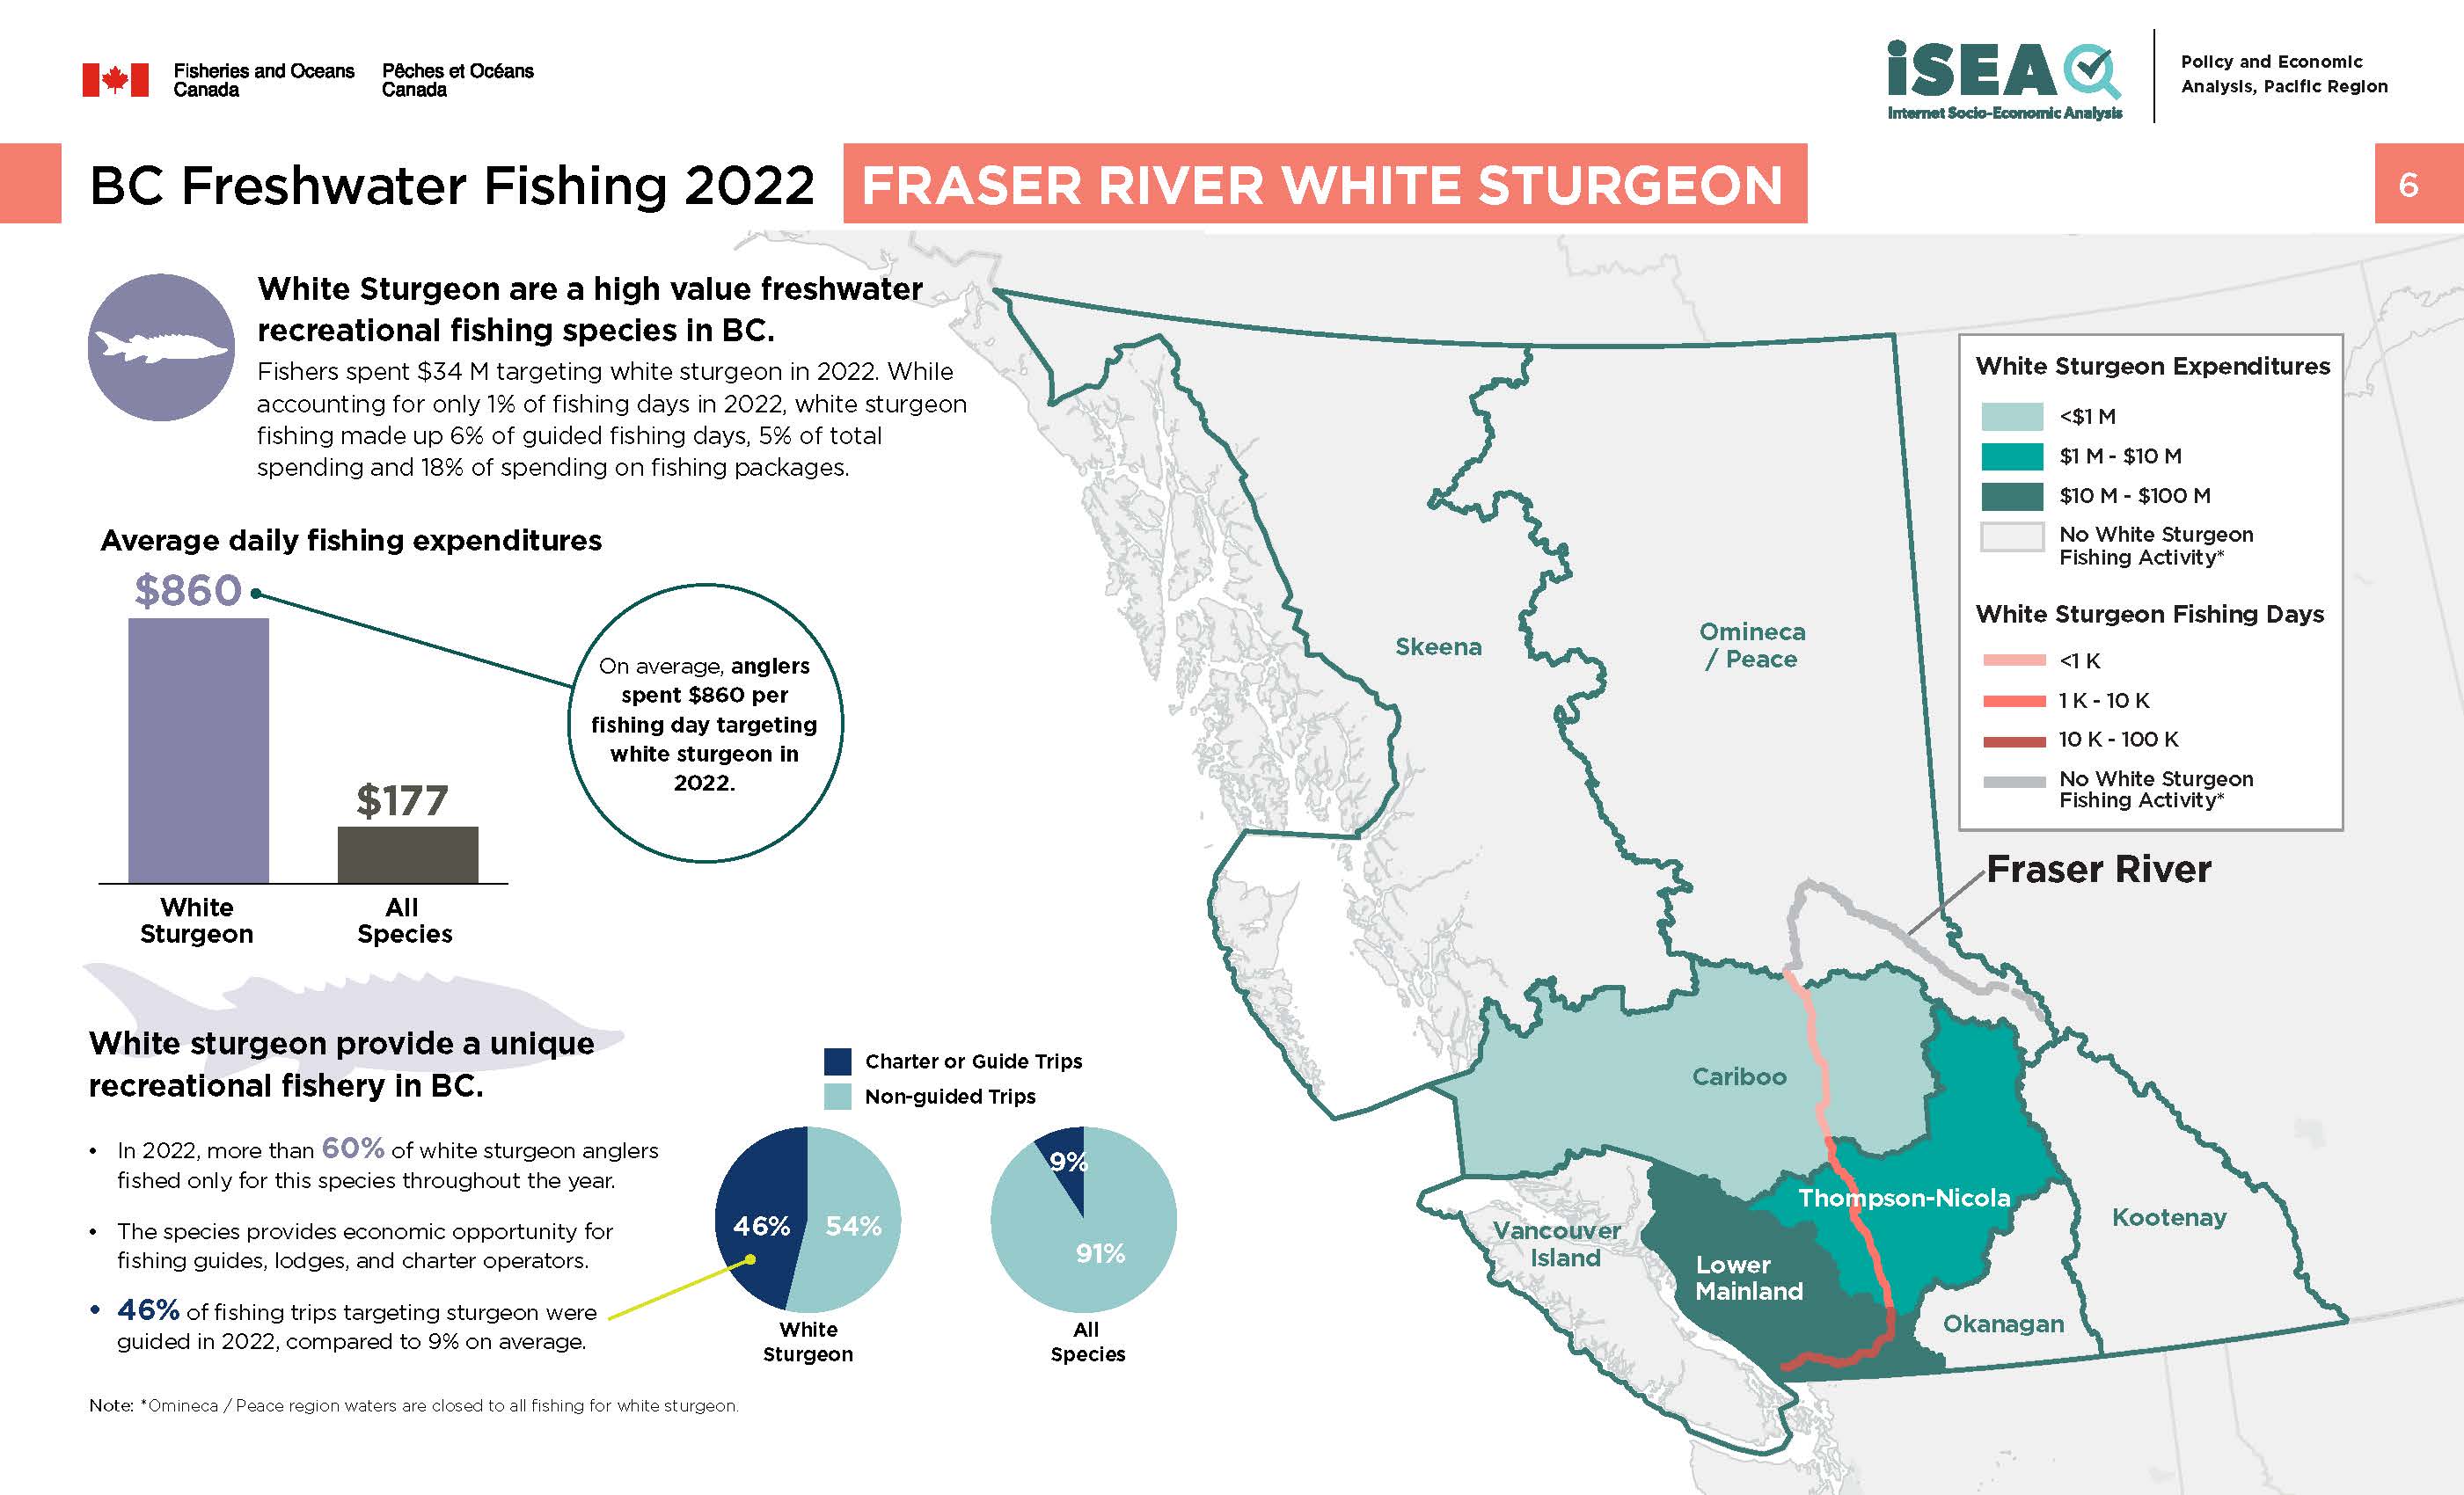 Photo: infographic of BC freshwater fishing 2022, Fraser River white sturgeon